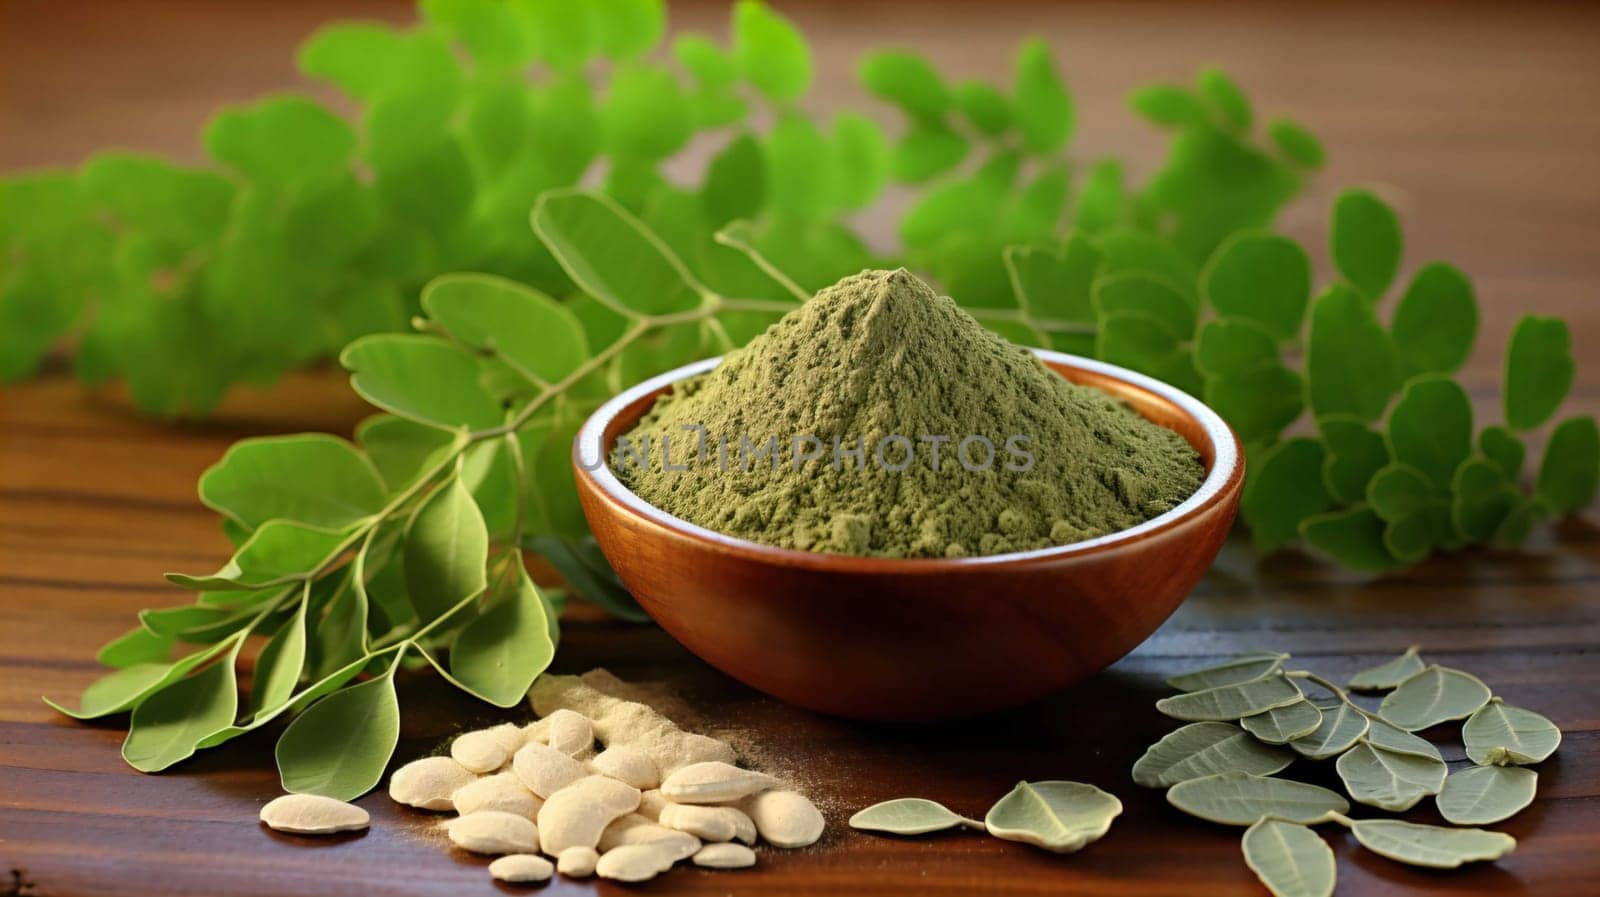  , Moringa oliefera herb leaves, oil and powder Used to treat anemia, rheumatism, cancer, diarrhea, diabetes , Generate AI